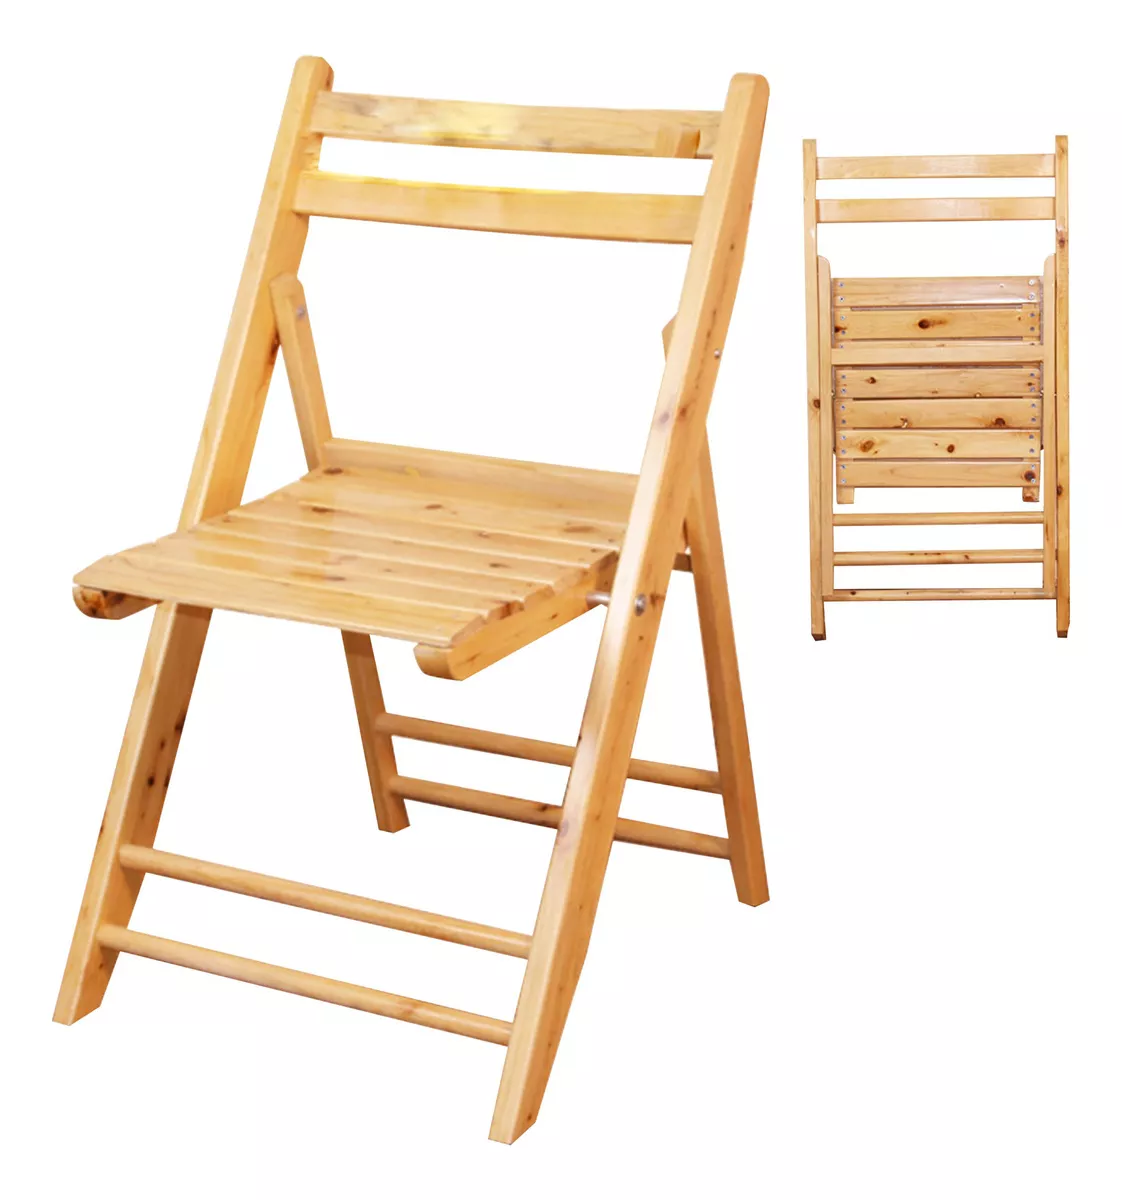 Tercera imagen para búsqueda de sillas plegables de madera